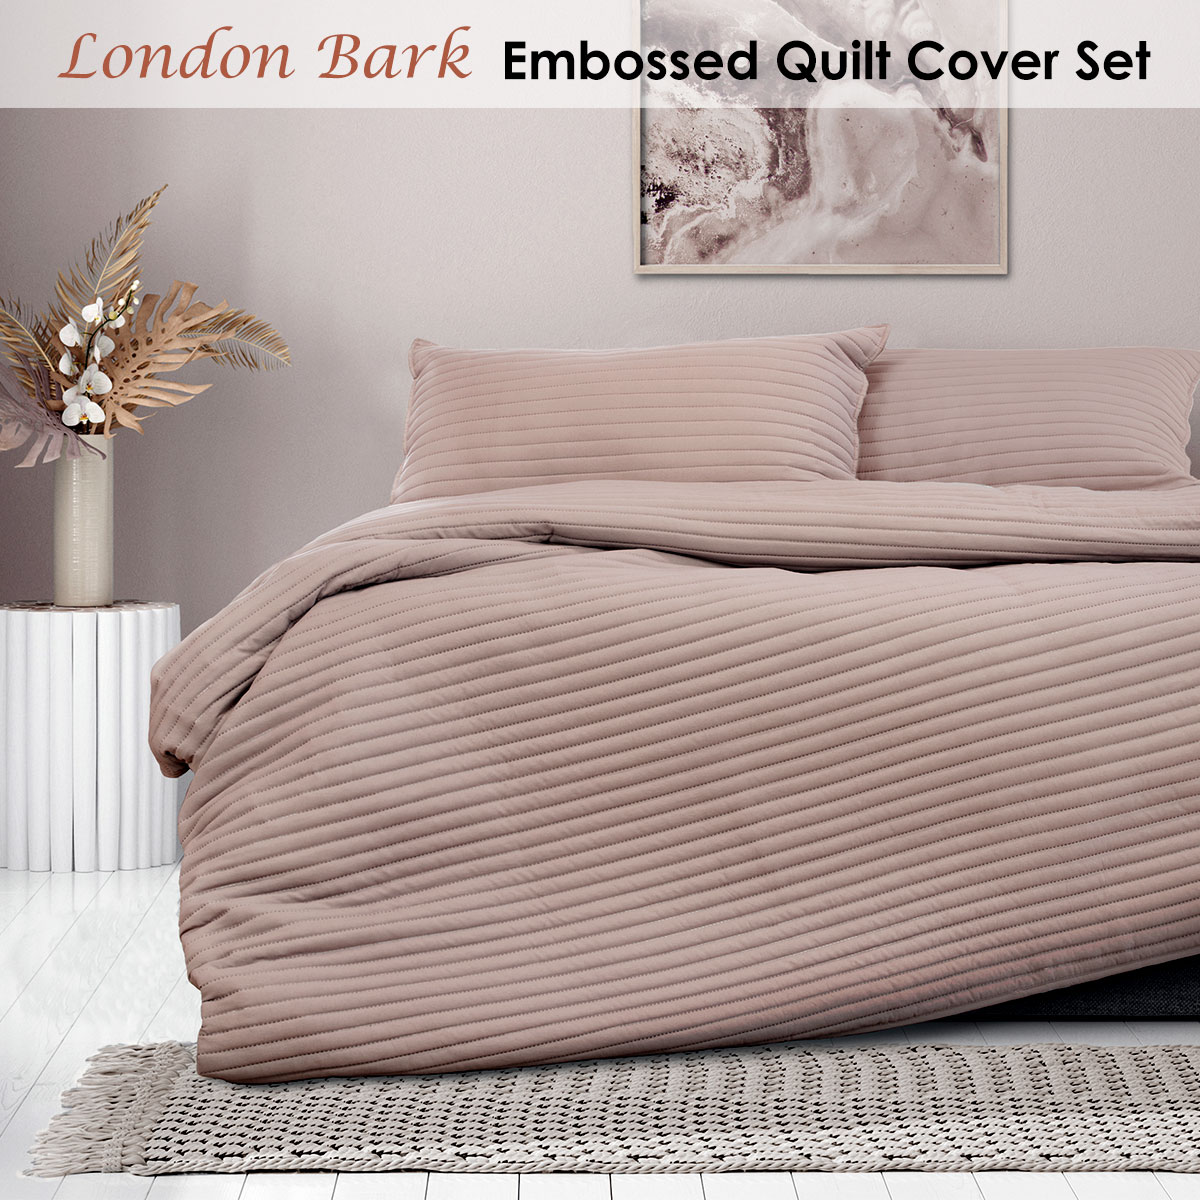 London Bark Embossed Quilt Cover Set by Ardor